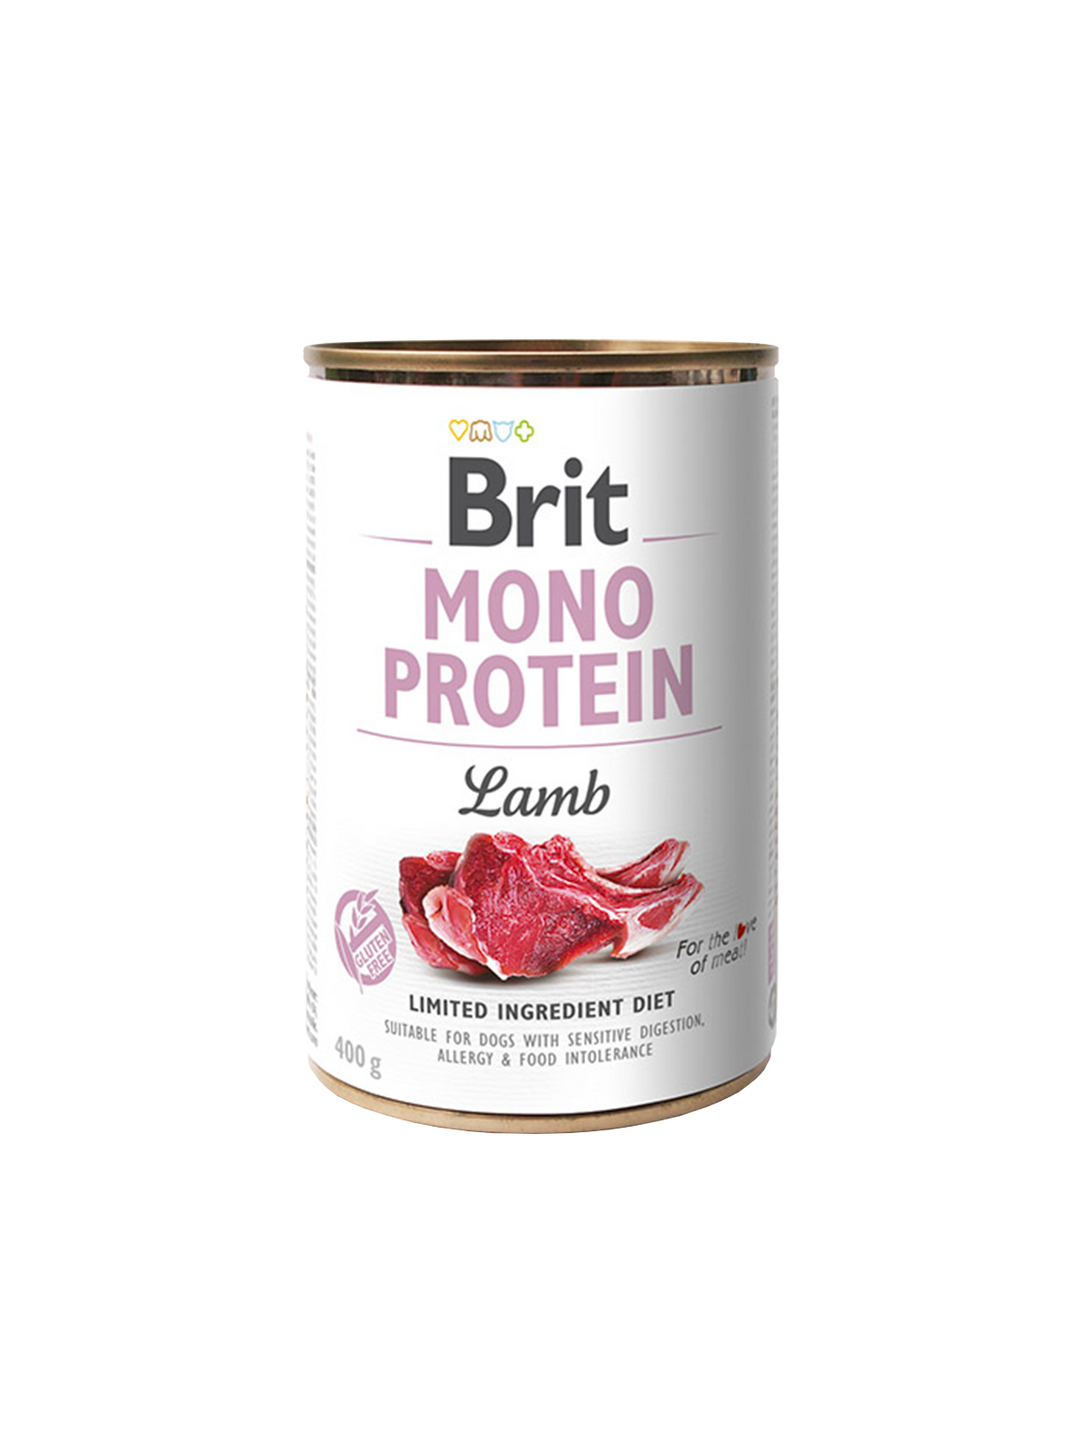 Brit Mono Protein tins 400g - Lamb